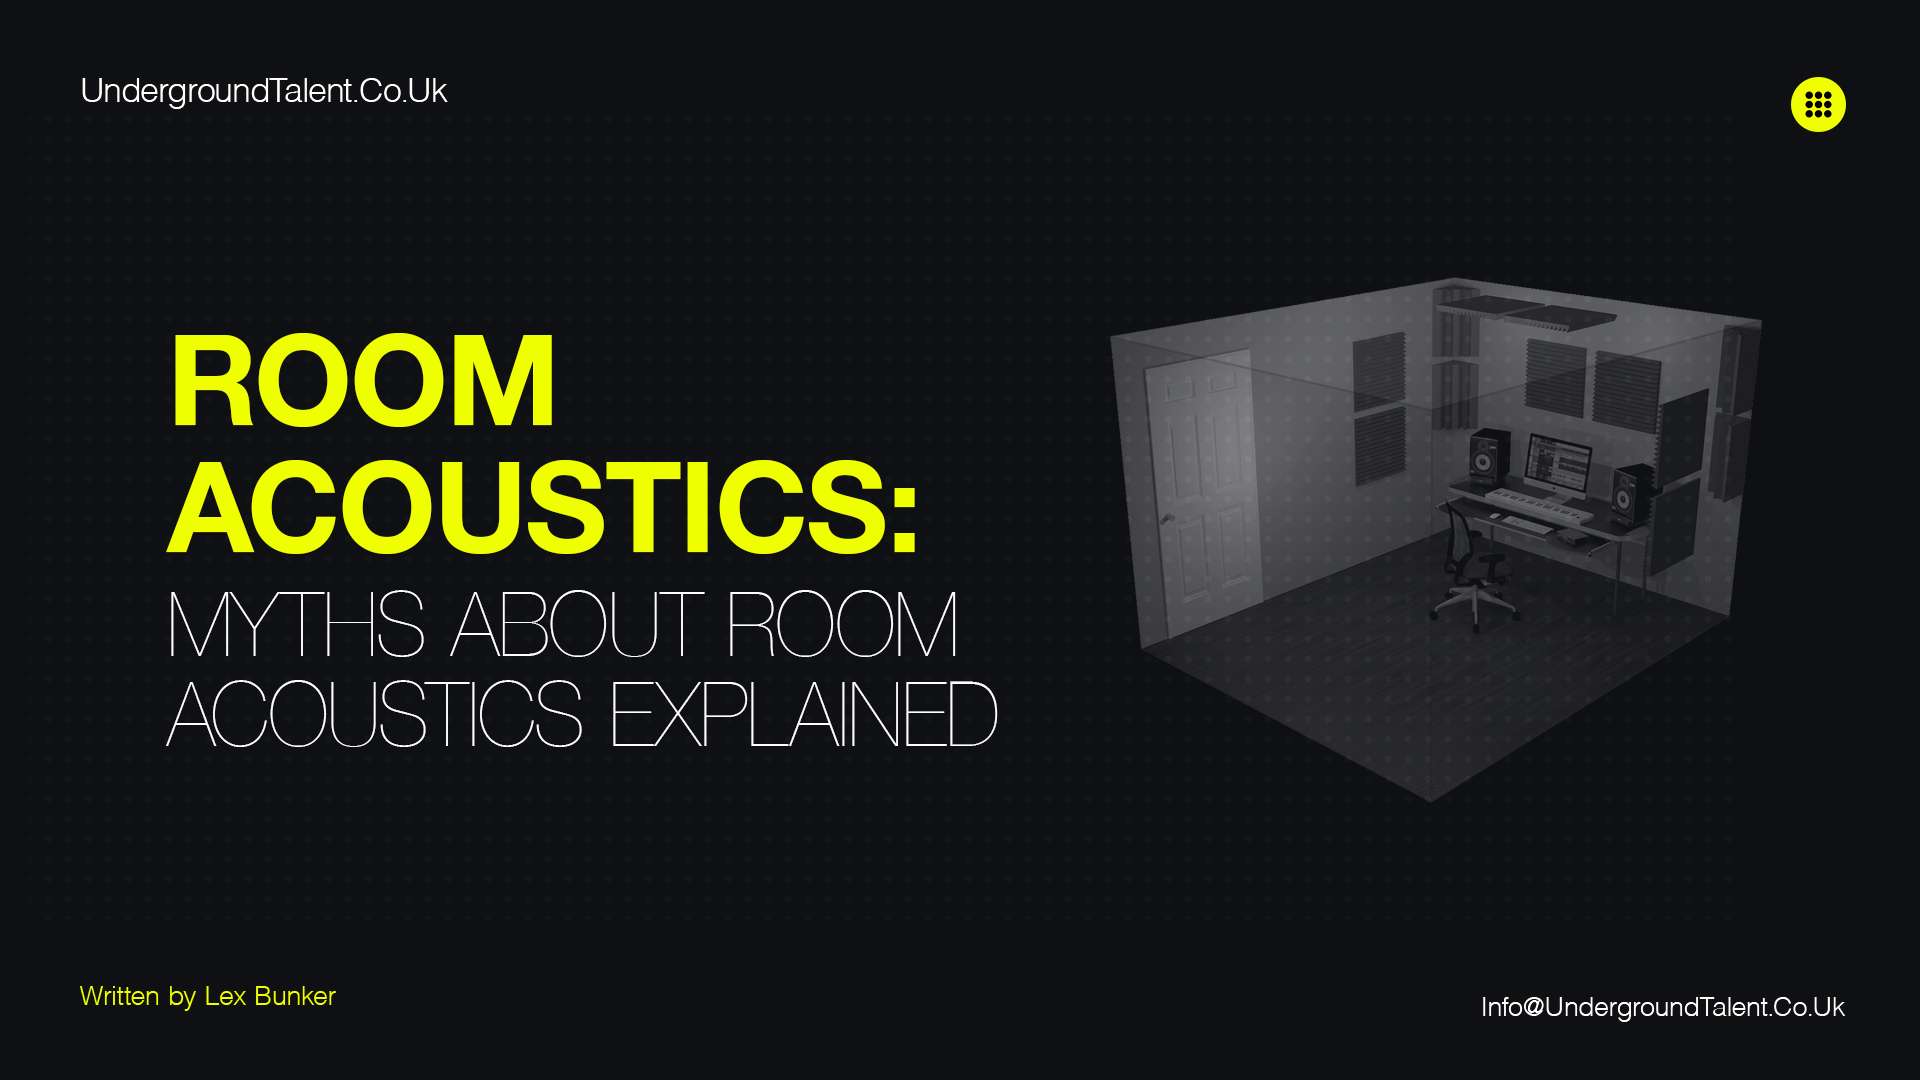 Myths About Room Acoustics Explained